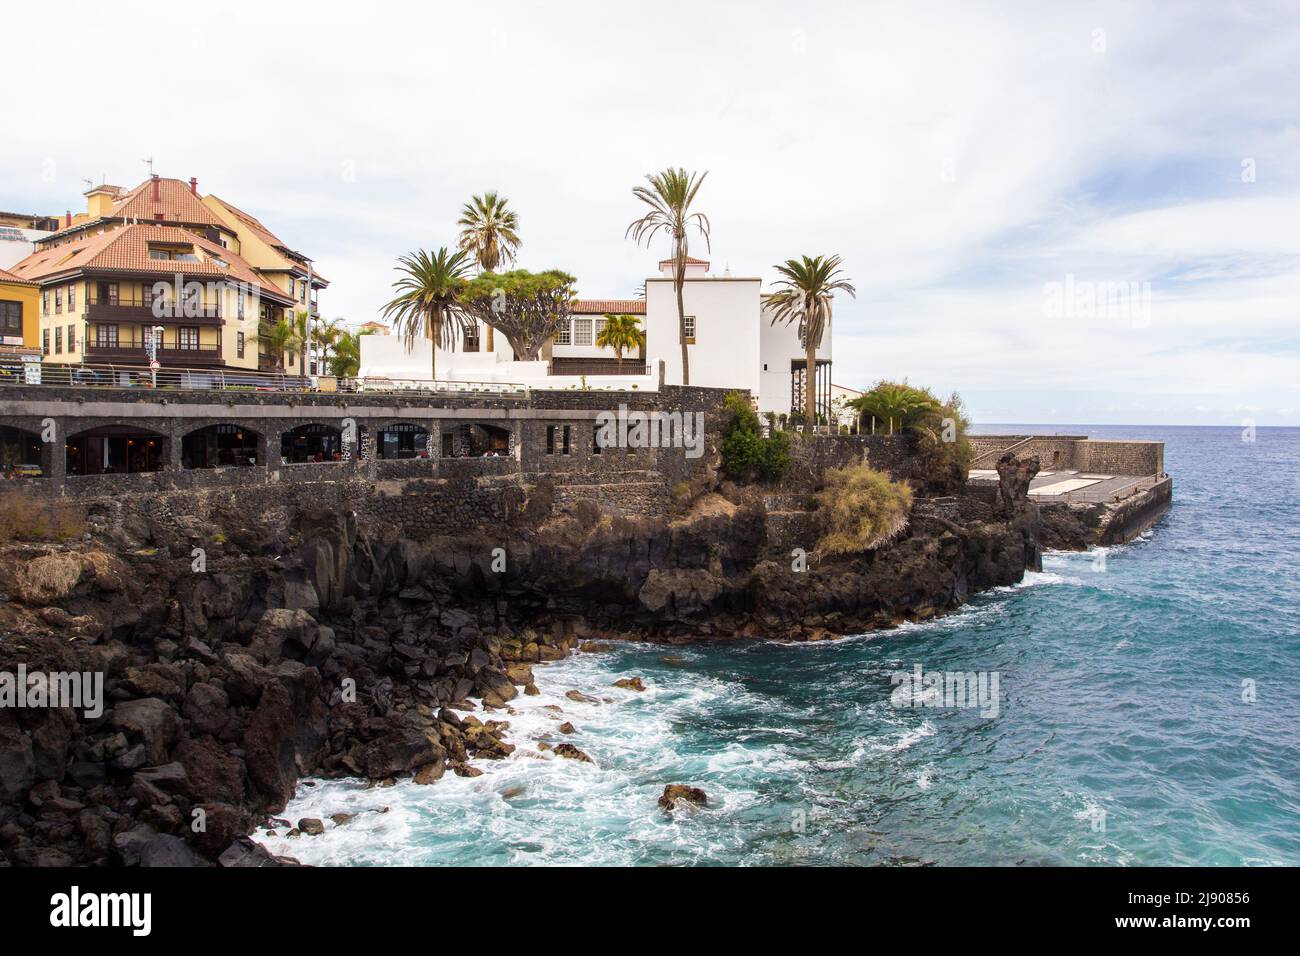 Beautiful view of Puerto de la Cruz. Puerto de la Cruz, Tenerife, Canary Islands, Spain. Stock Photo